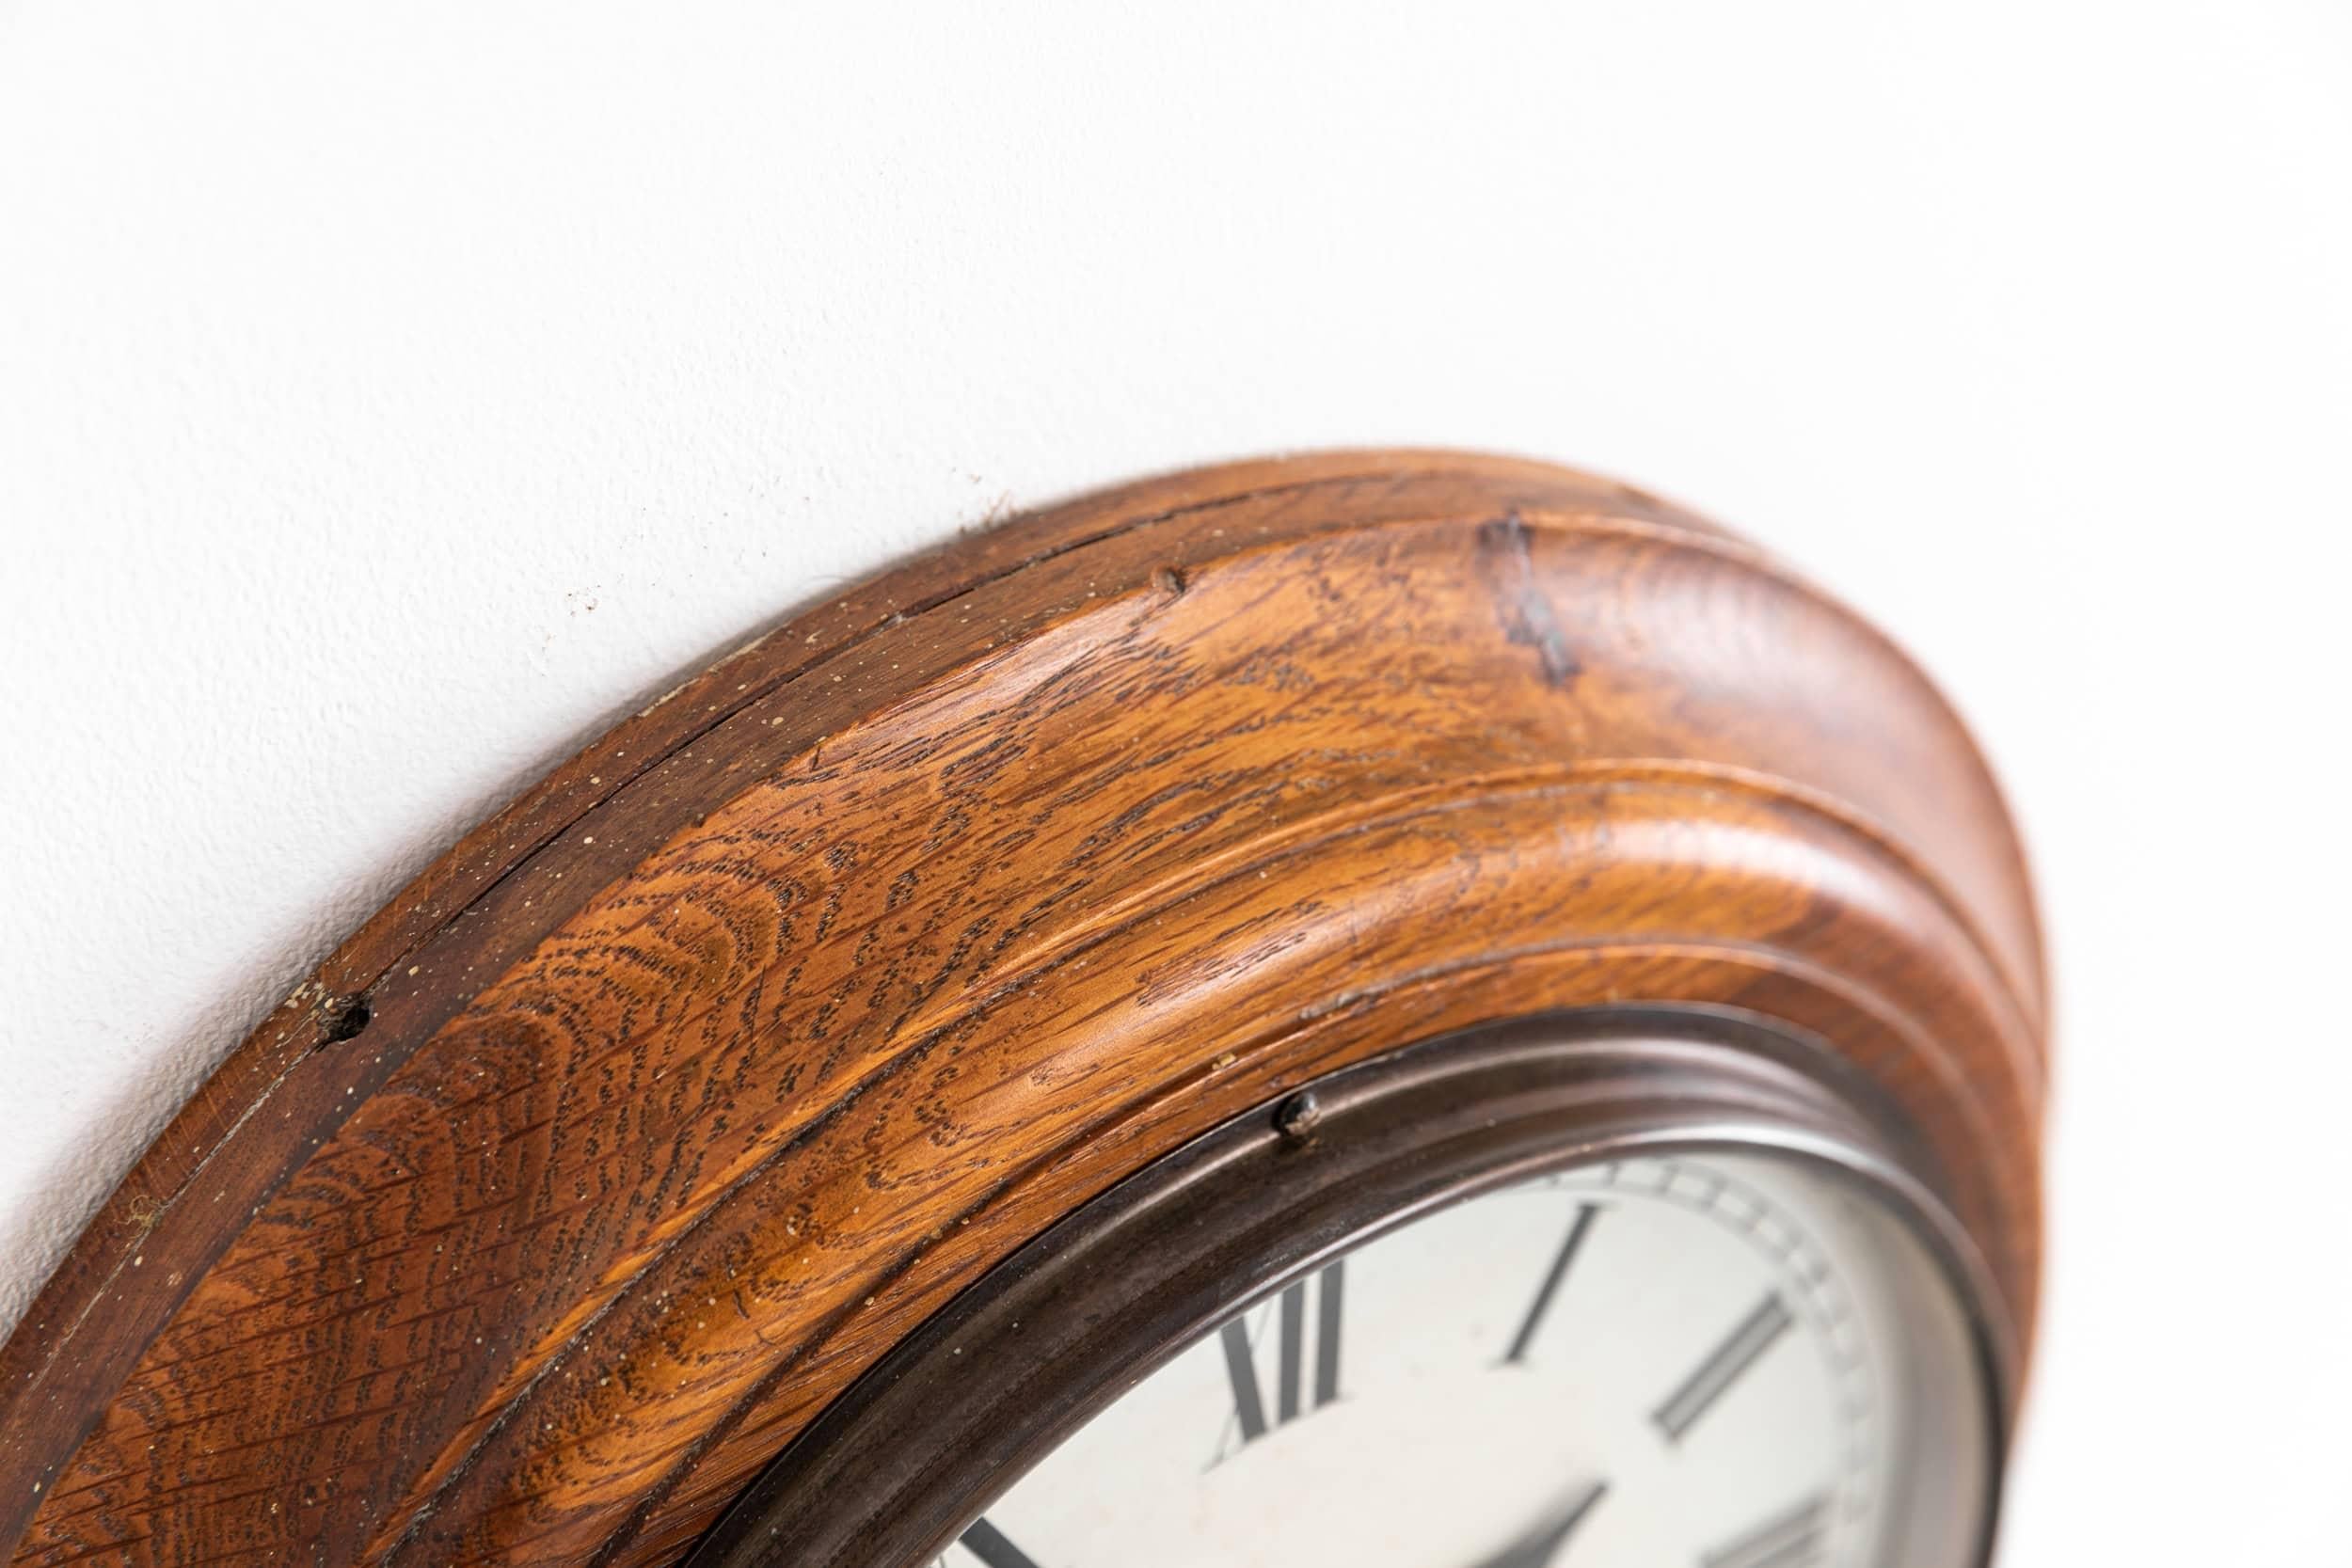 Pressed Vintage Industrial Diminutive Wooden Magneta Factory Railway Wall Clock, c.1930 For Sale